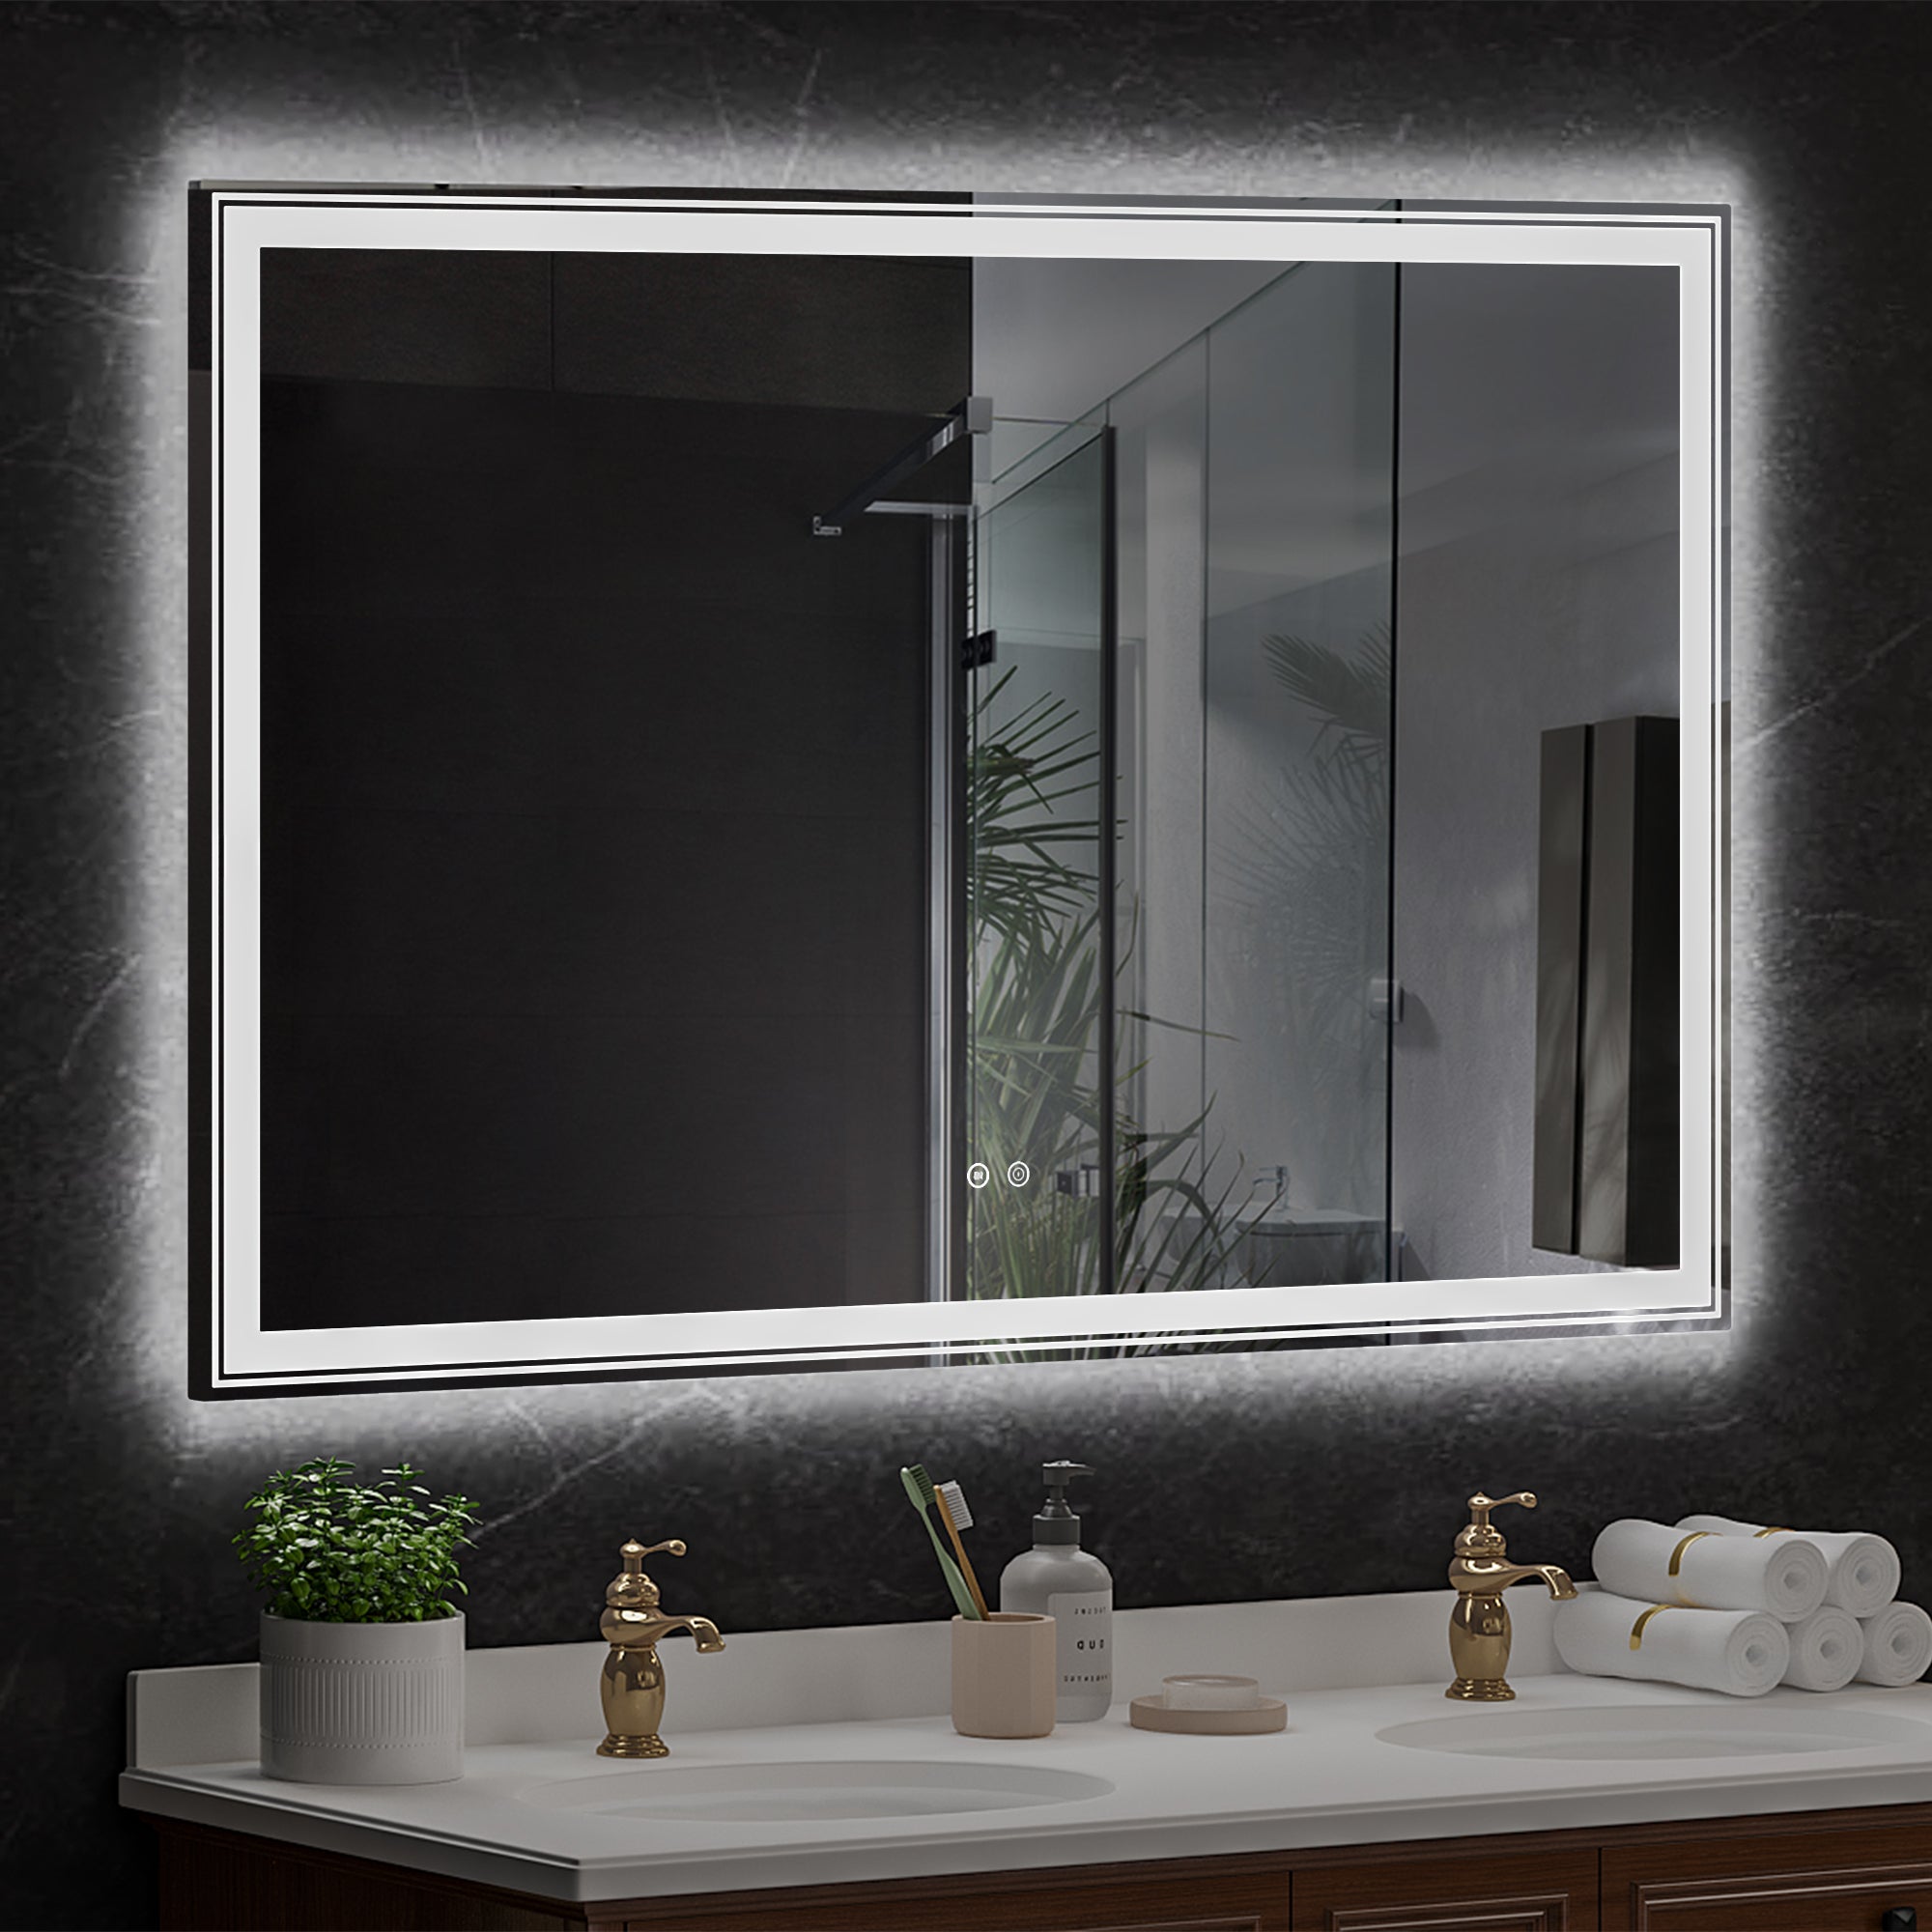 55"×36" inch LED Bathroom Vanity Mirror, Anti-Fog Memory, Adjustable Brightness